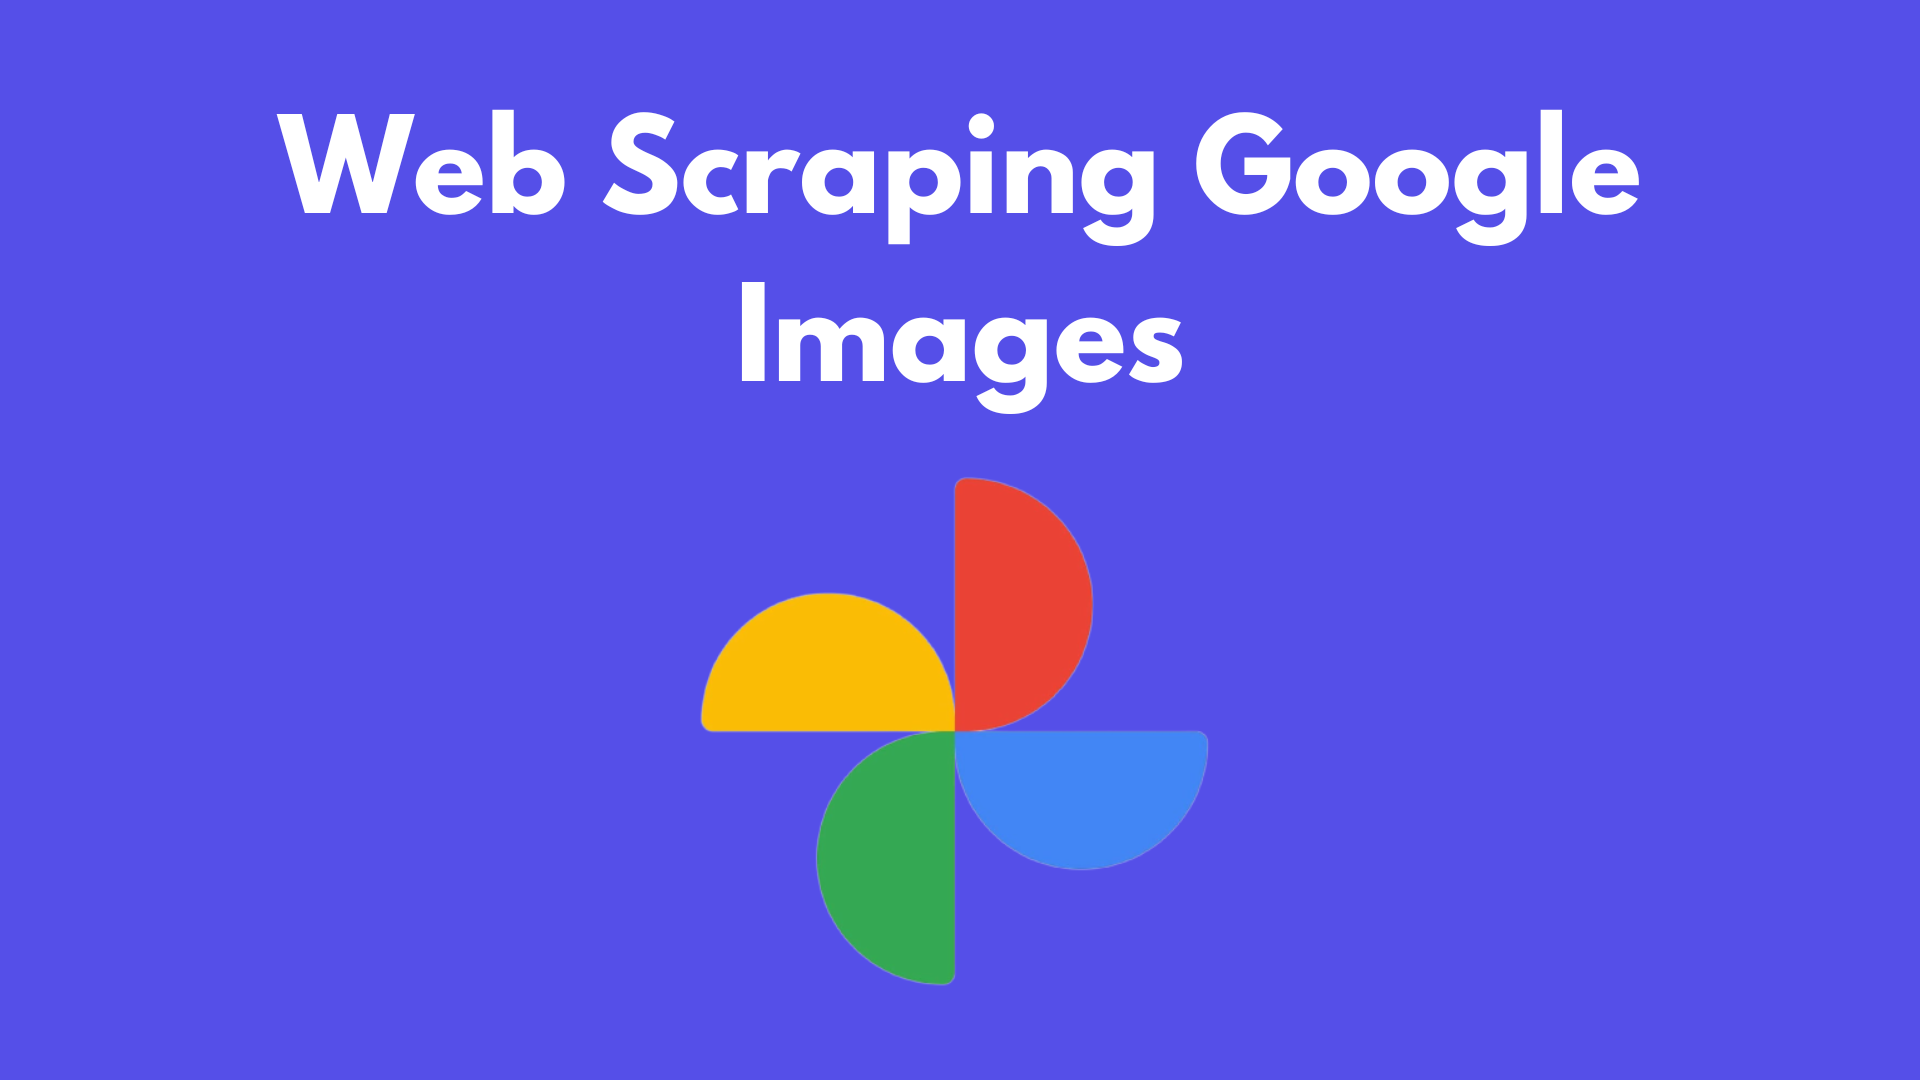 Web scraping Google Images